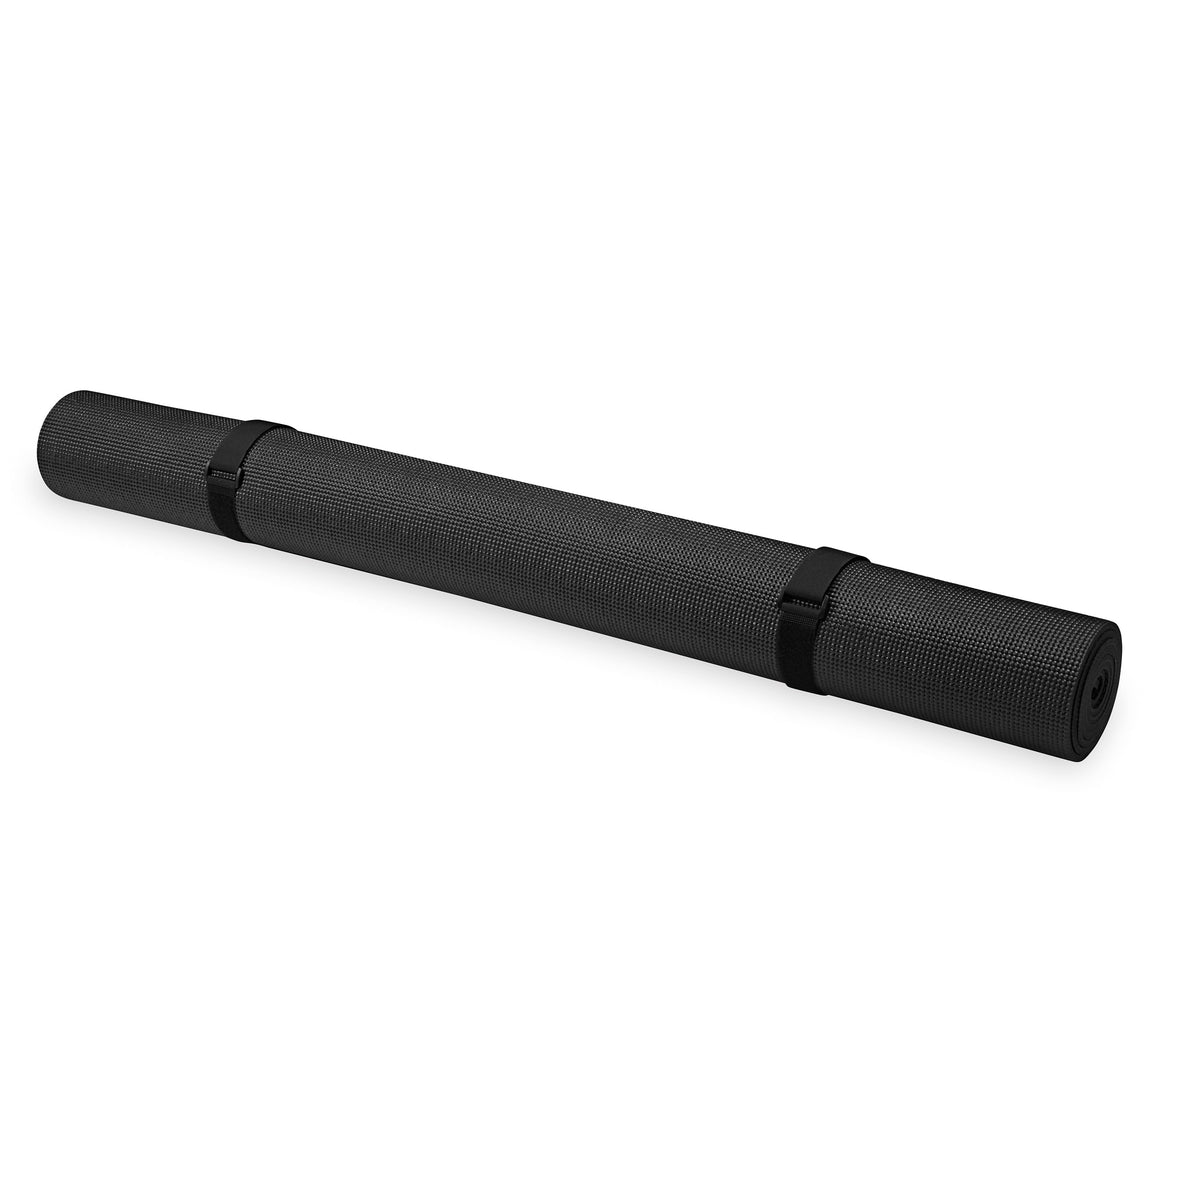 Extra Large Black Yoga Mat, Width 71.65″ x Length 48.03″, PVC Material,  32.9 Sq. ft